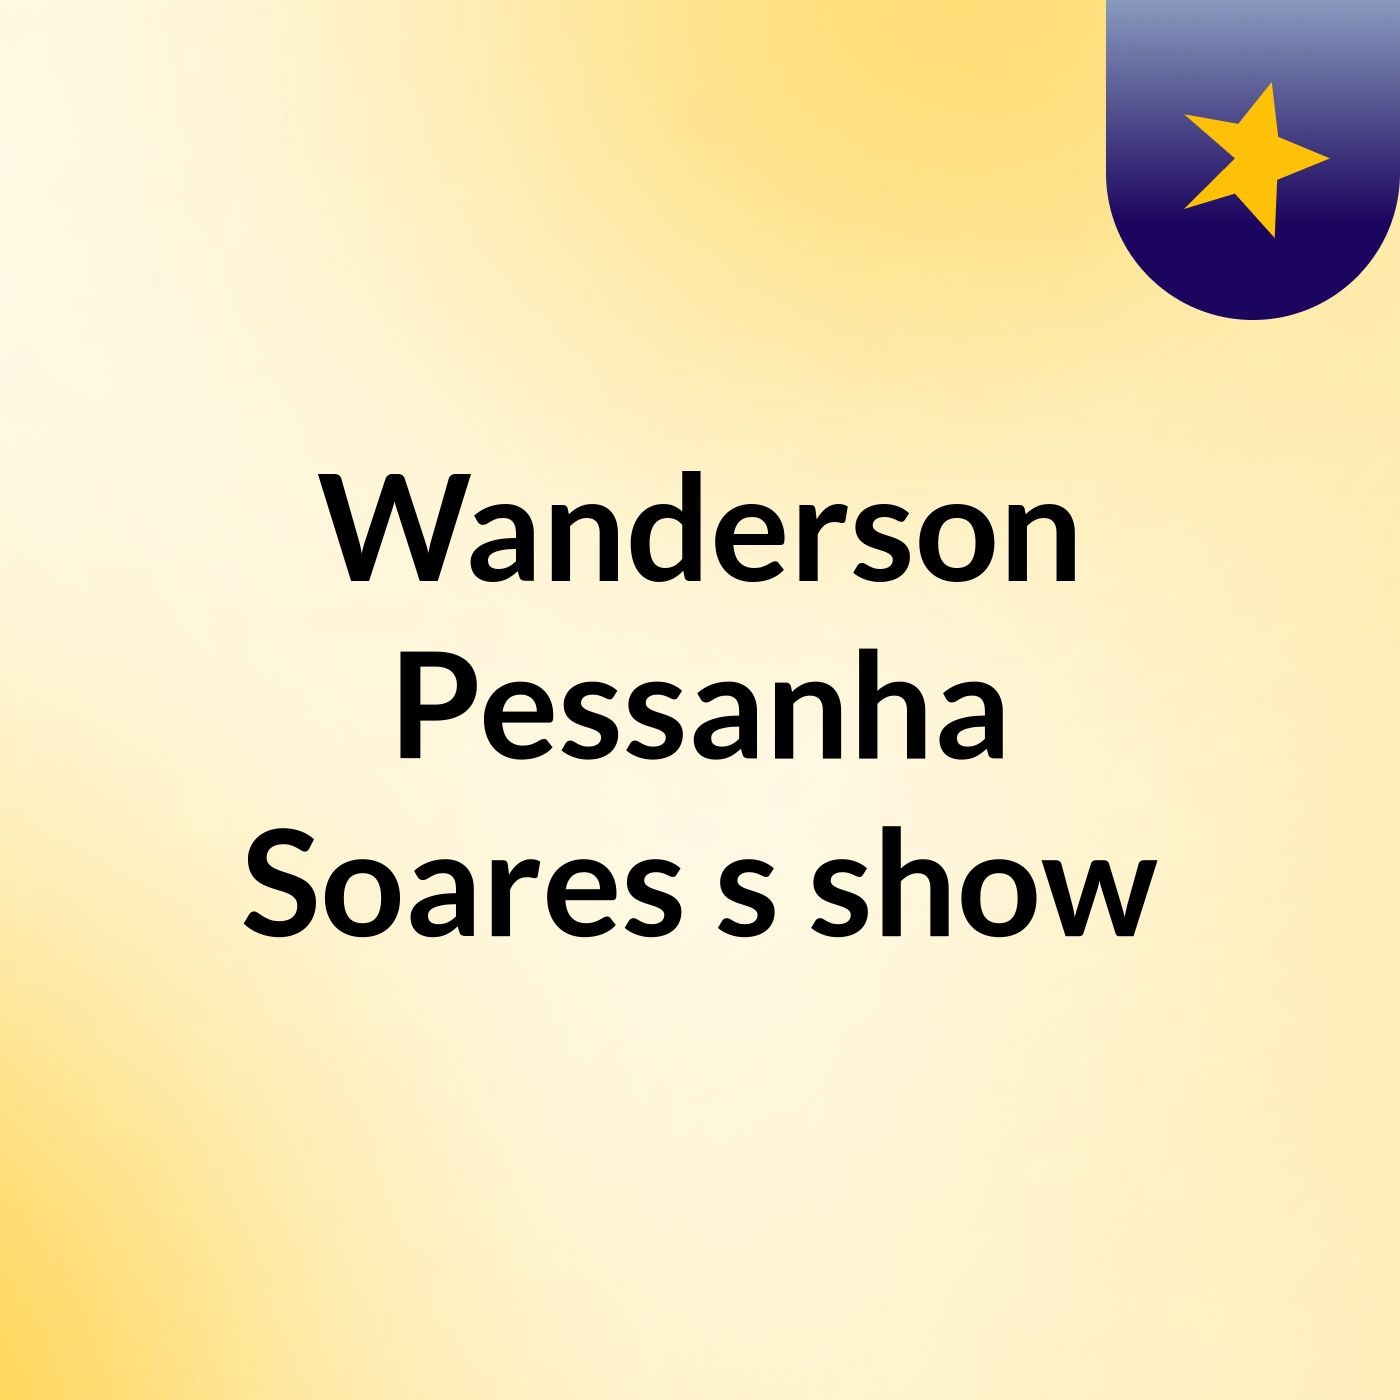 Wanderson Pessanha Soares's show